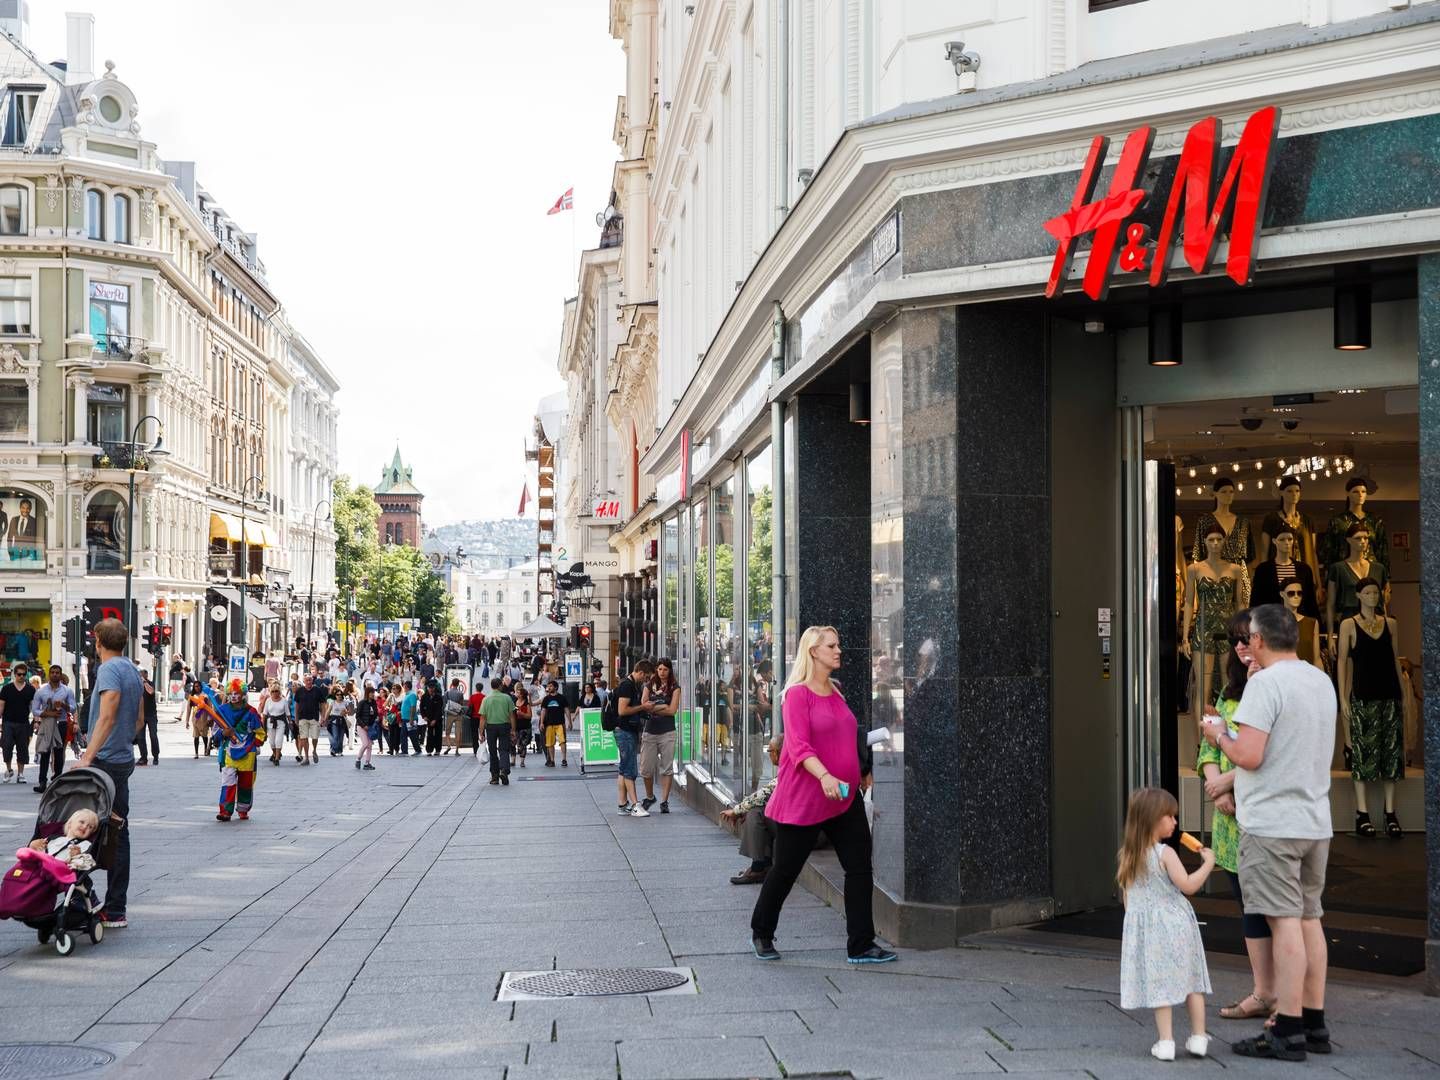 RETURBEGYR: H&M vil fortsette med returgebyrer i Norge | Foto: Berit Roald/NTB